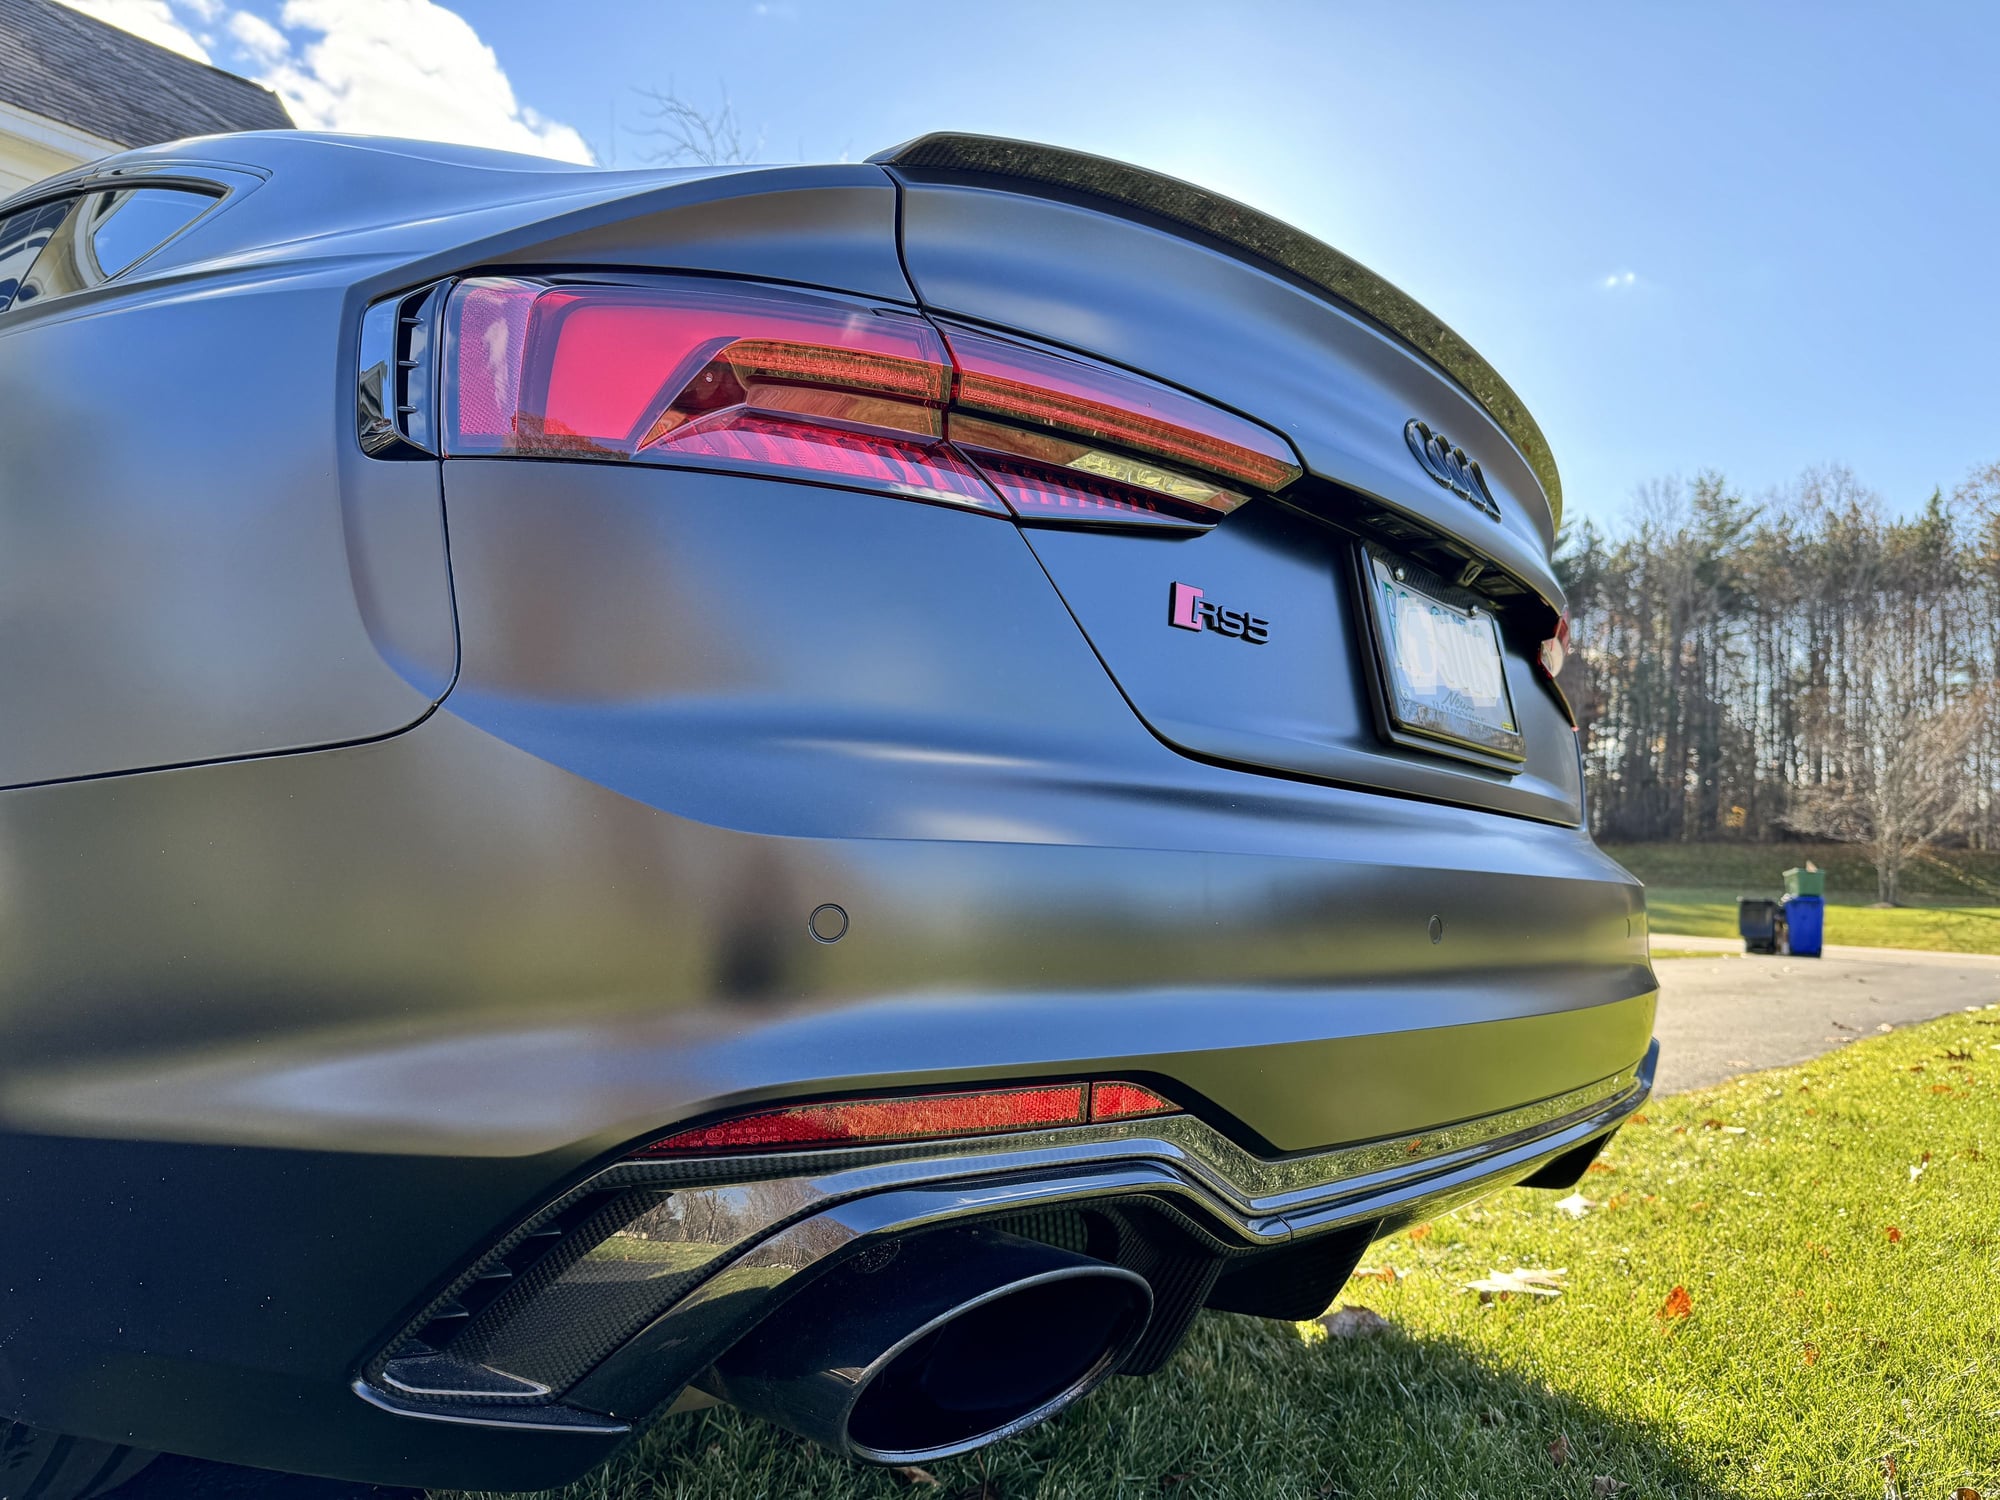 2019 Audi RS5 Sportback - 2019 Audi RS5 Black XPEL Stealth Wrap Absolutely Stunning! - Used - VIN WUABWCF51KA903530 - 13,500 Miles - 6 cyl - AWD - Automatic - Sedan - Black - North Hampton, NH 03862, United States